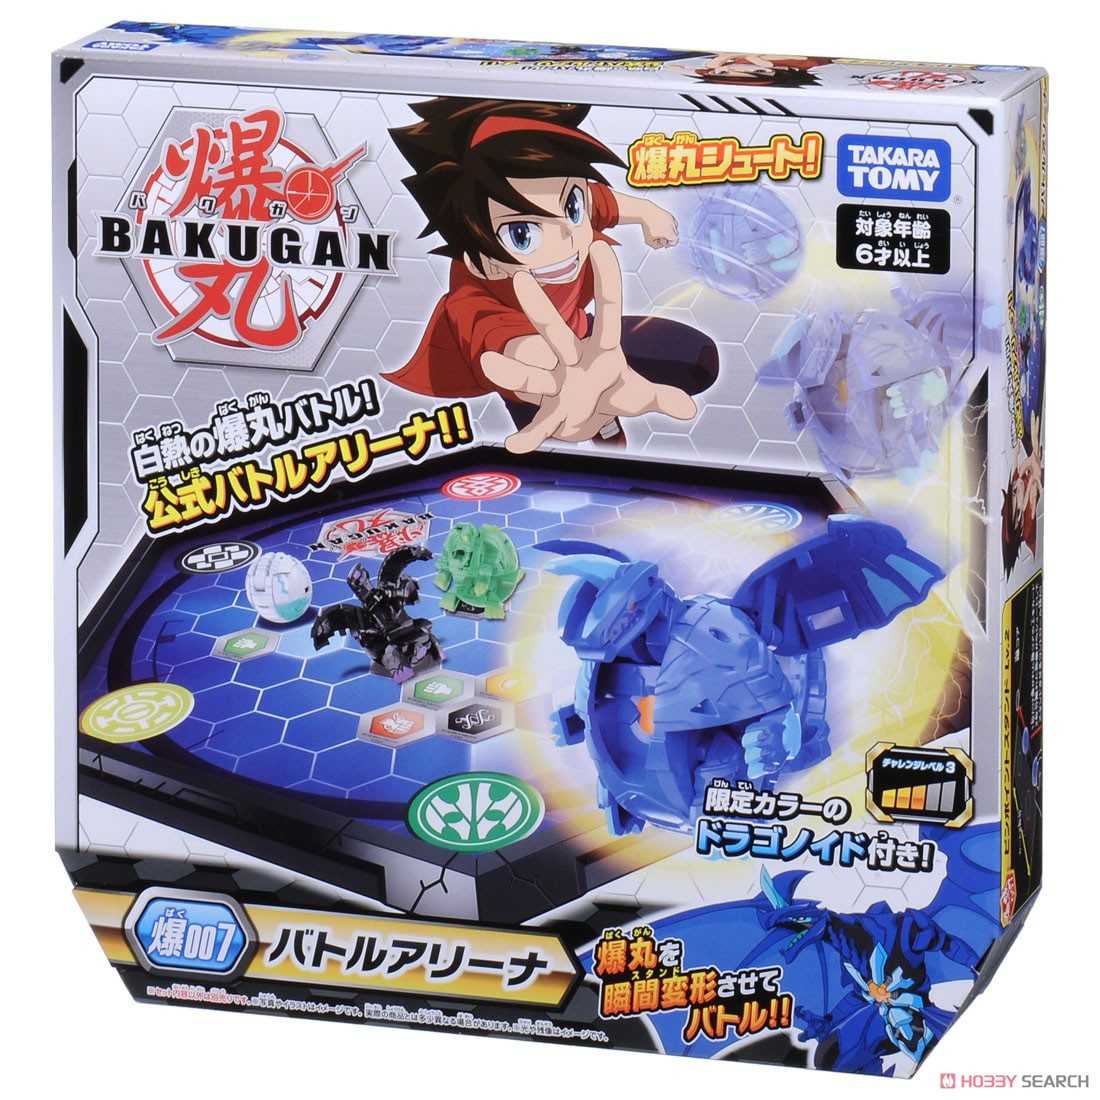 Baku007 Bakugan Battle Arena (Character Toy) Package1